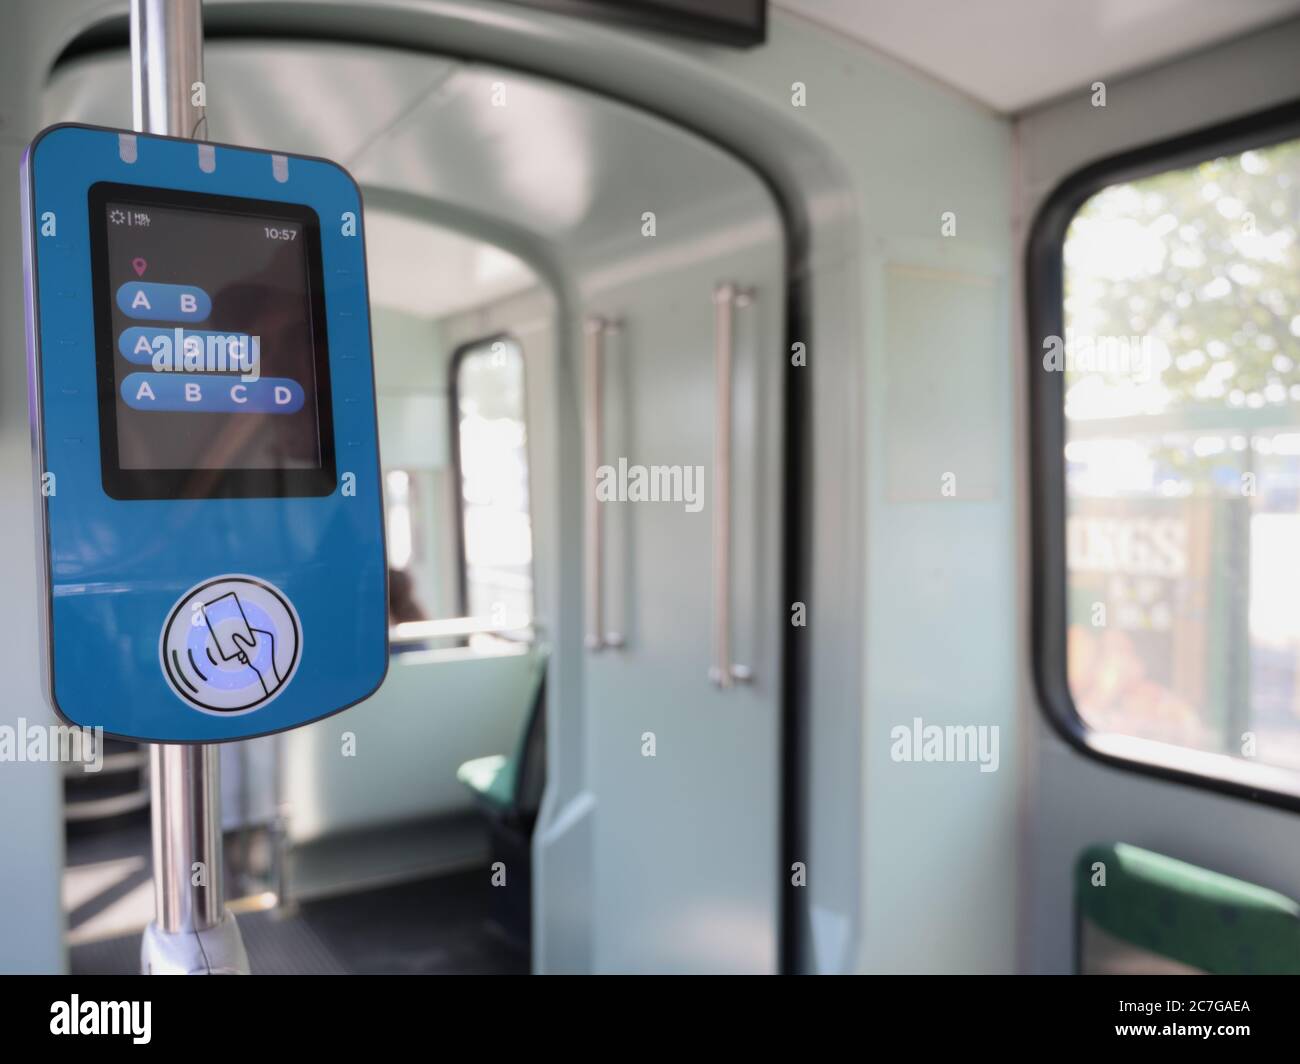 Ticket validation machine in a tram in Helsinki, Finland Stock Photo